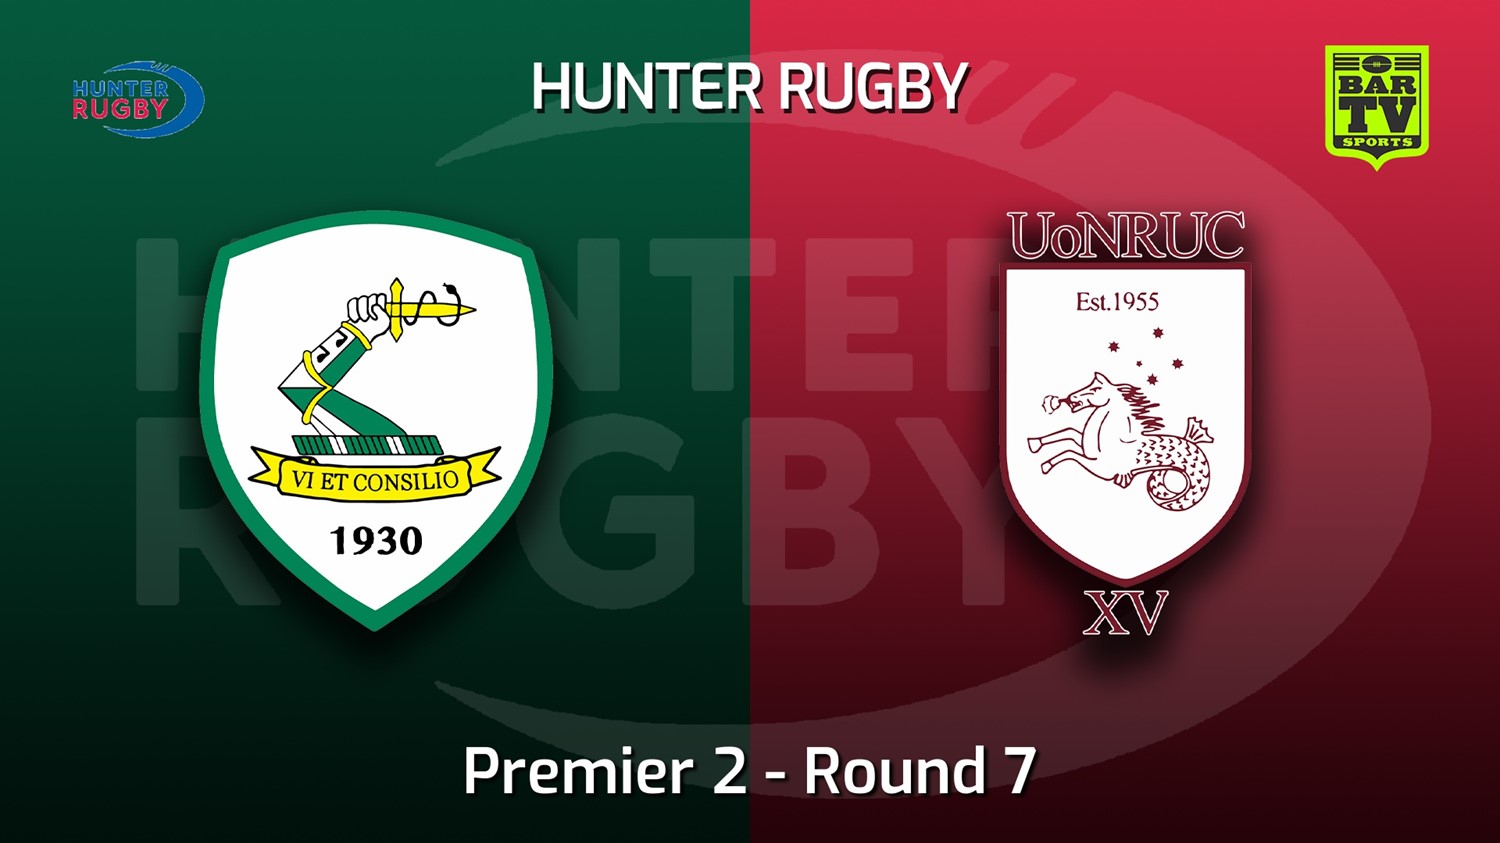 220604-Hunter Rugby Round 7 - Premier 2 - Merewether Carlton v University Of Newcastle Slate Image